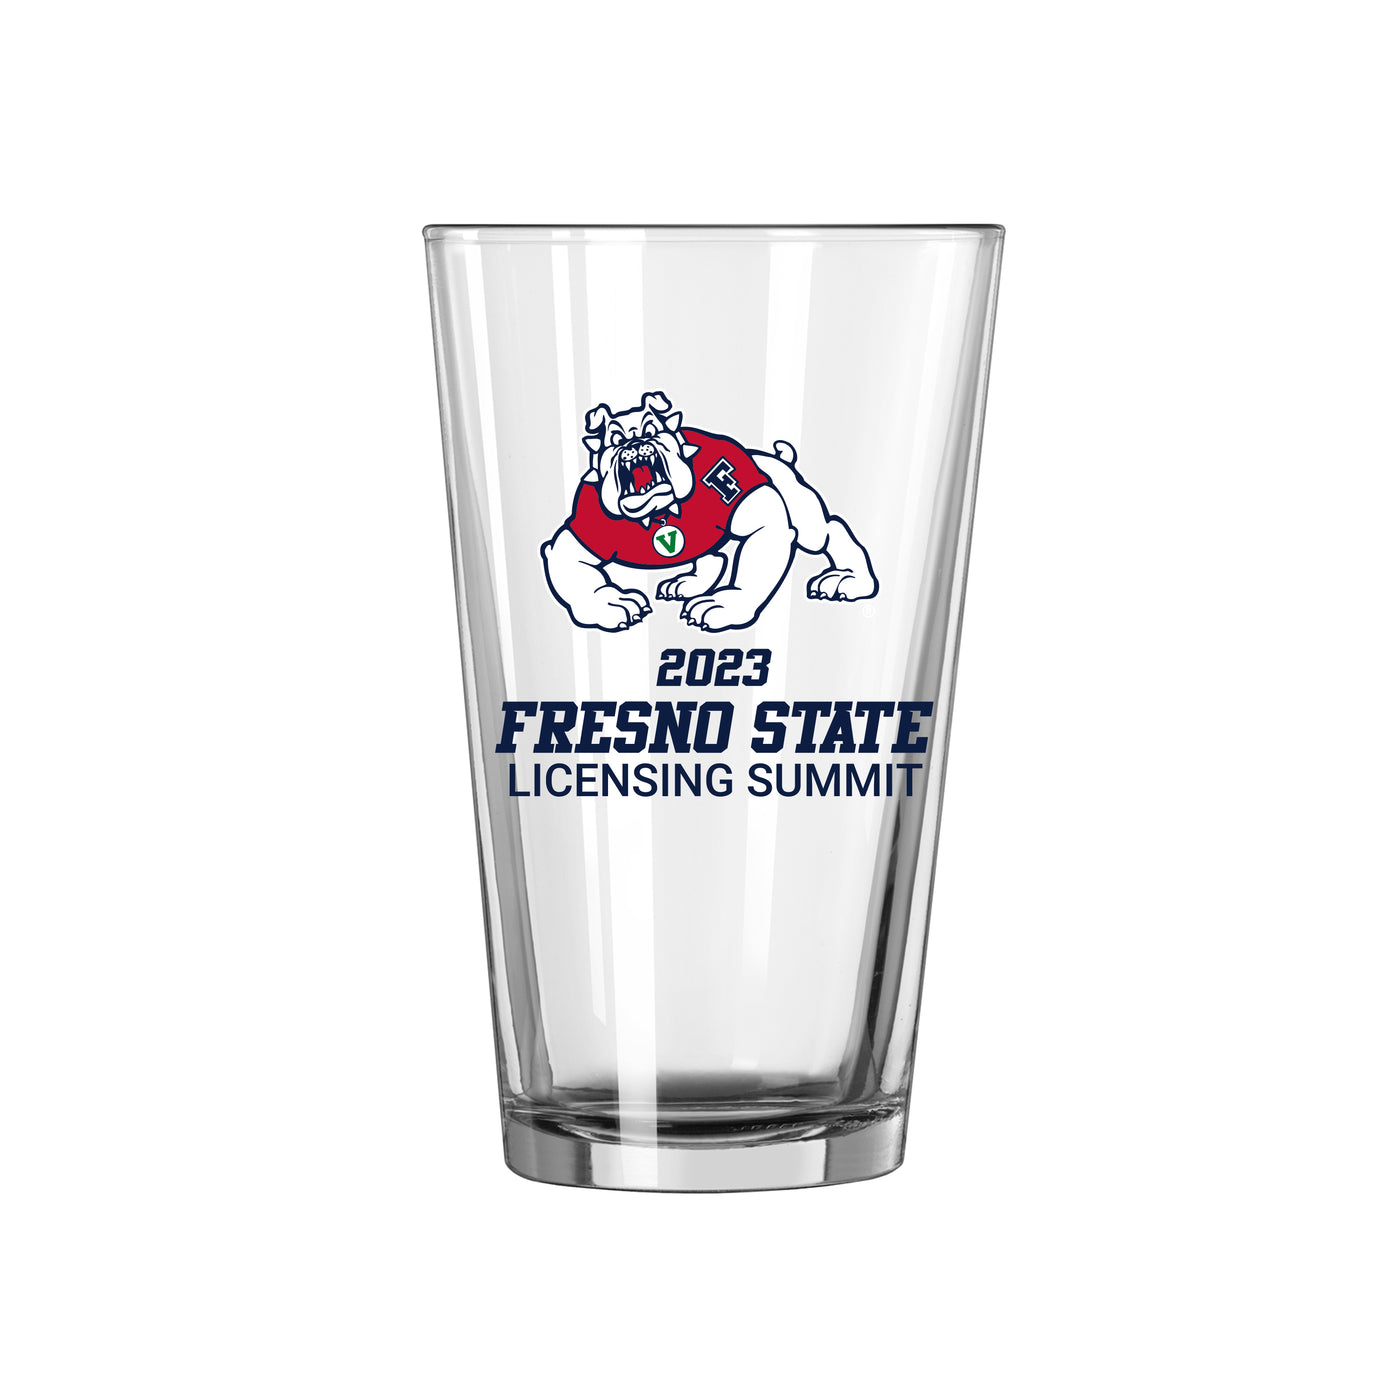 Fresno State 2023 Licensing Summit 16oz Pint Glass